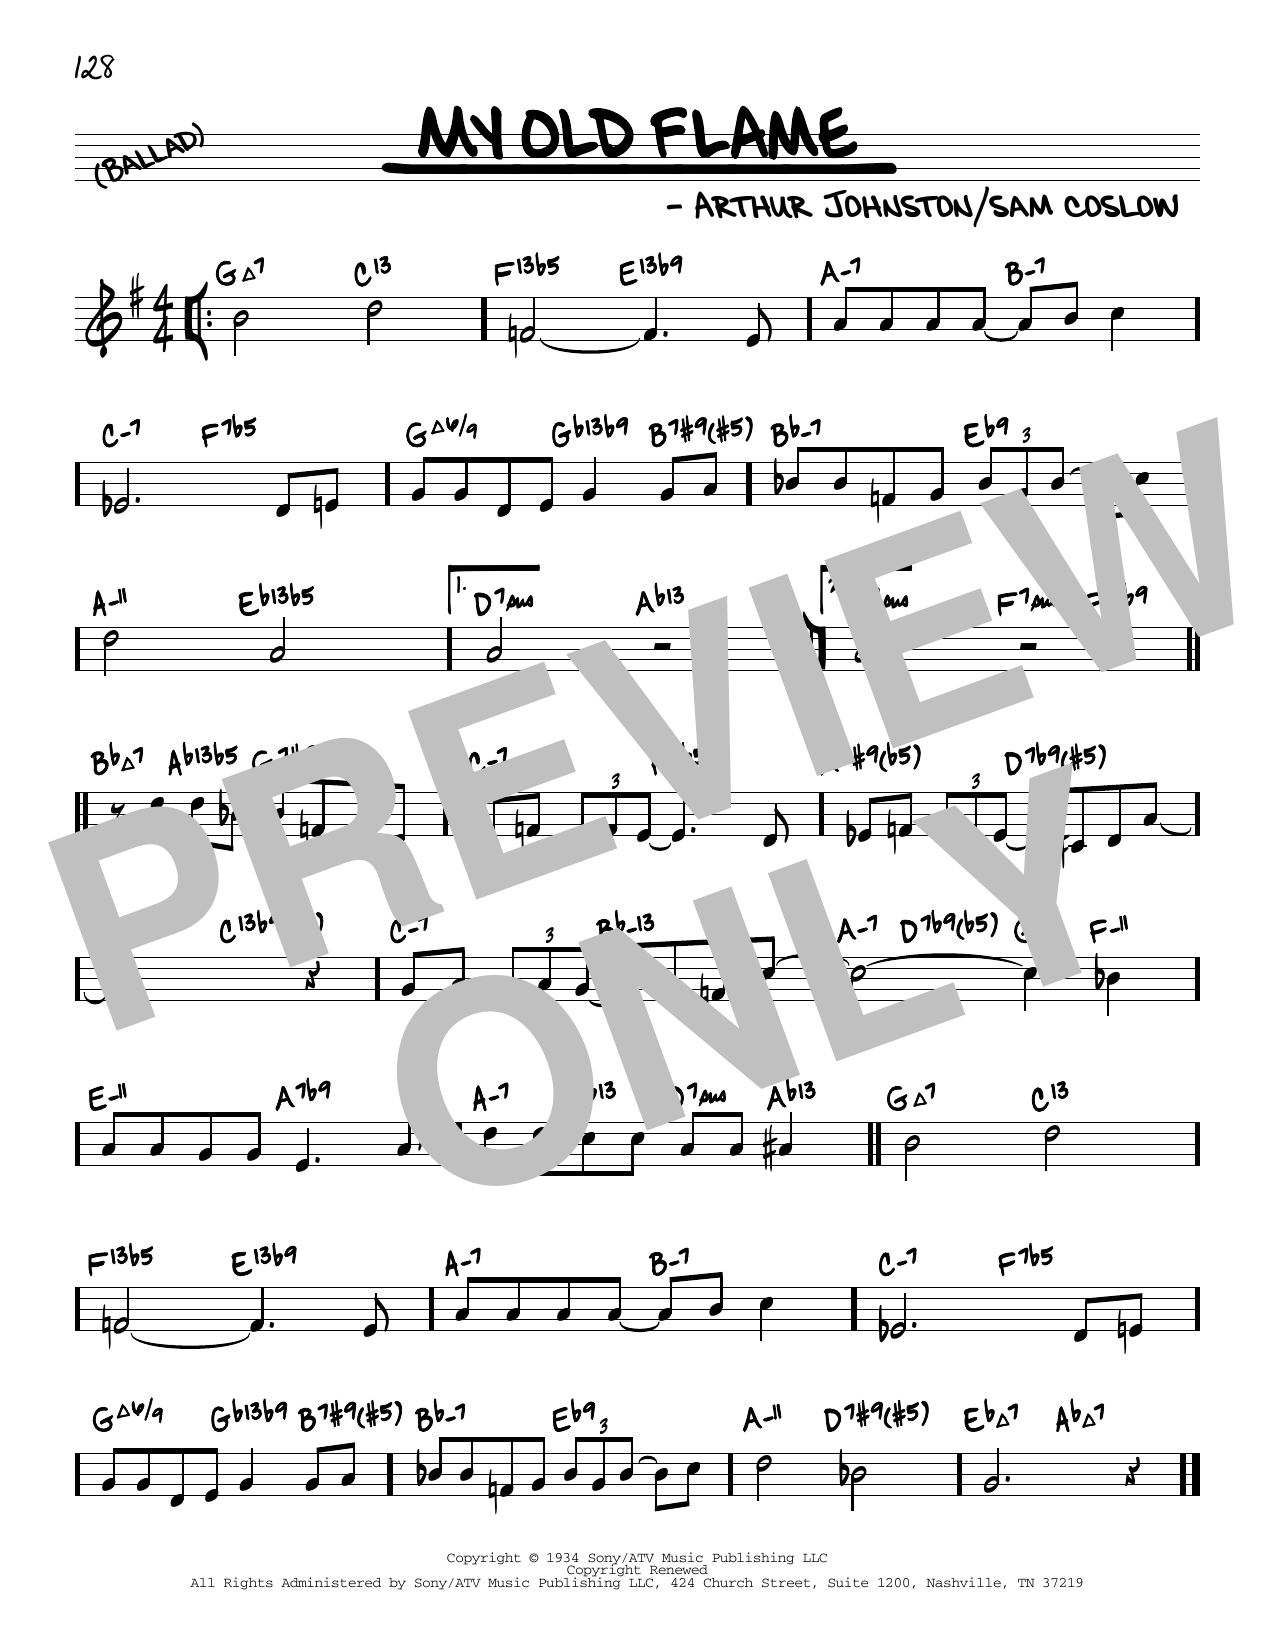 Arthur Johnston My Old Flame (arr. David Hazeltine) Sheet Music Notes & Chords for Real Book – Enhanced Chords - Download or Print PDF